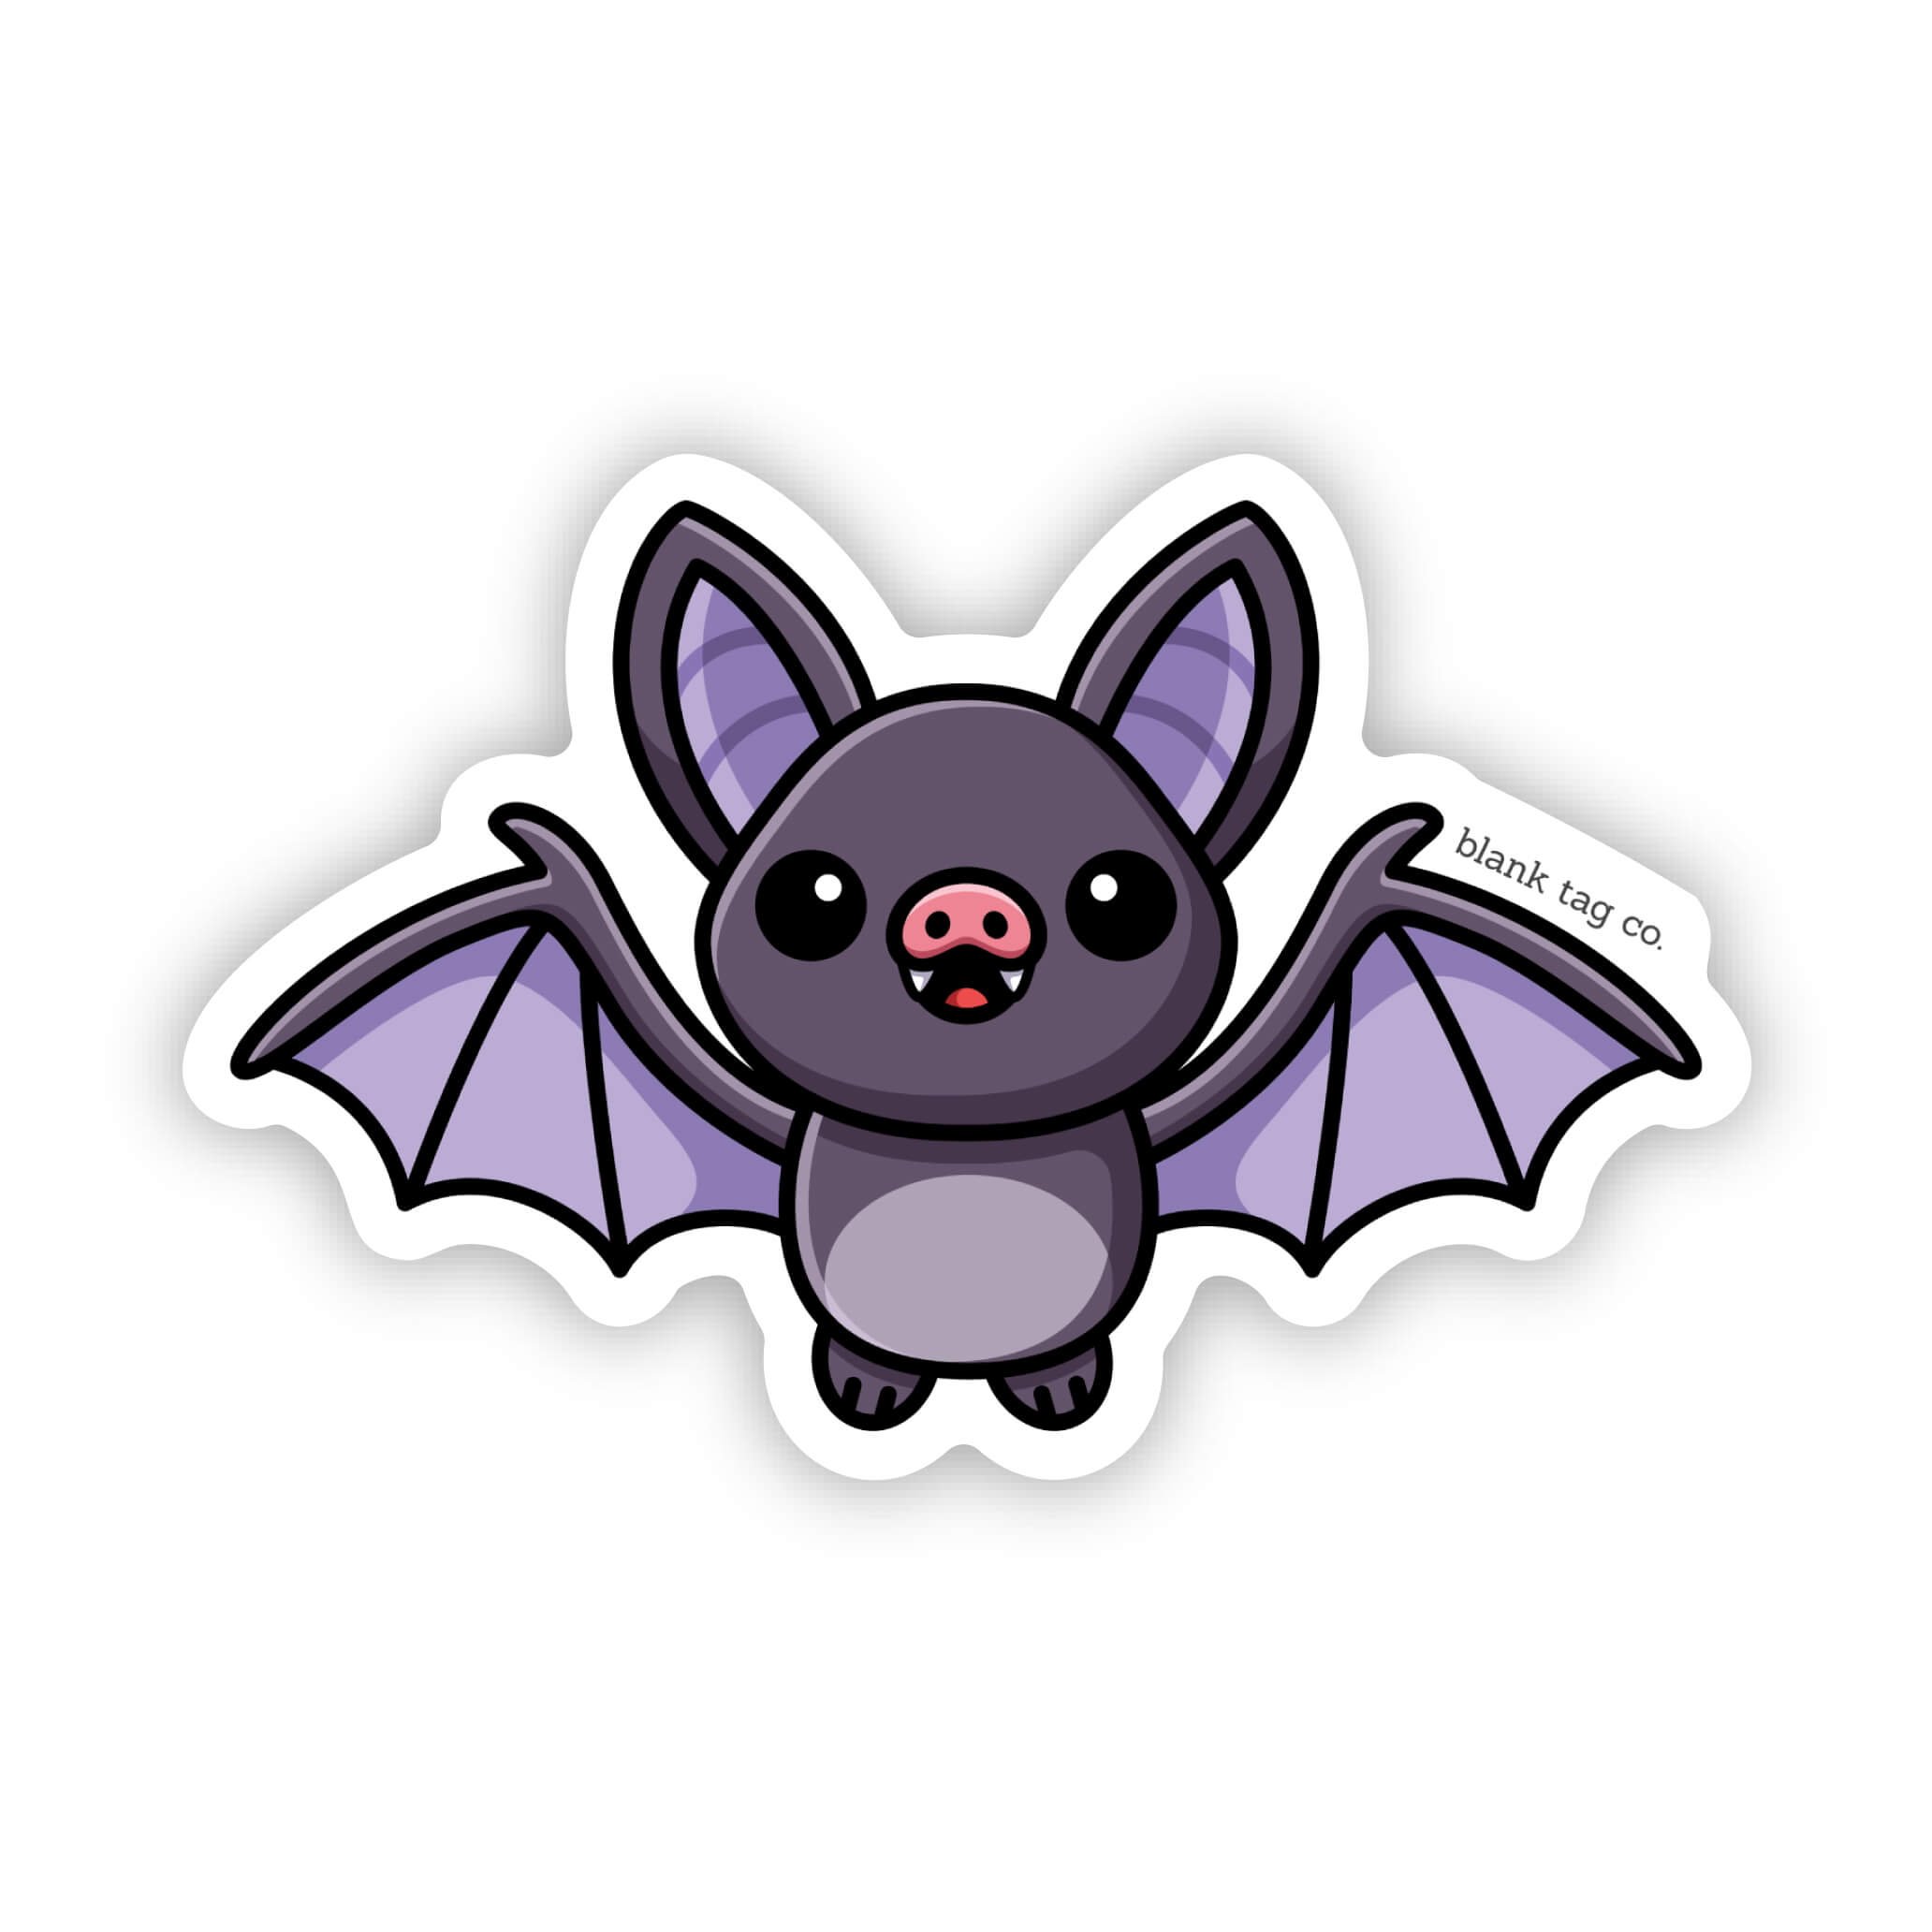 The Bat Sticker